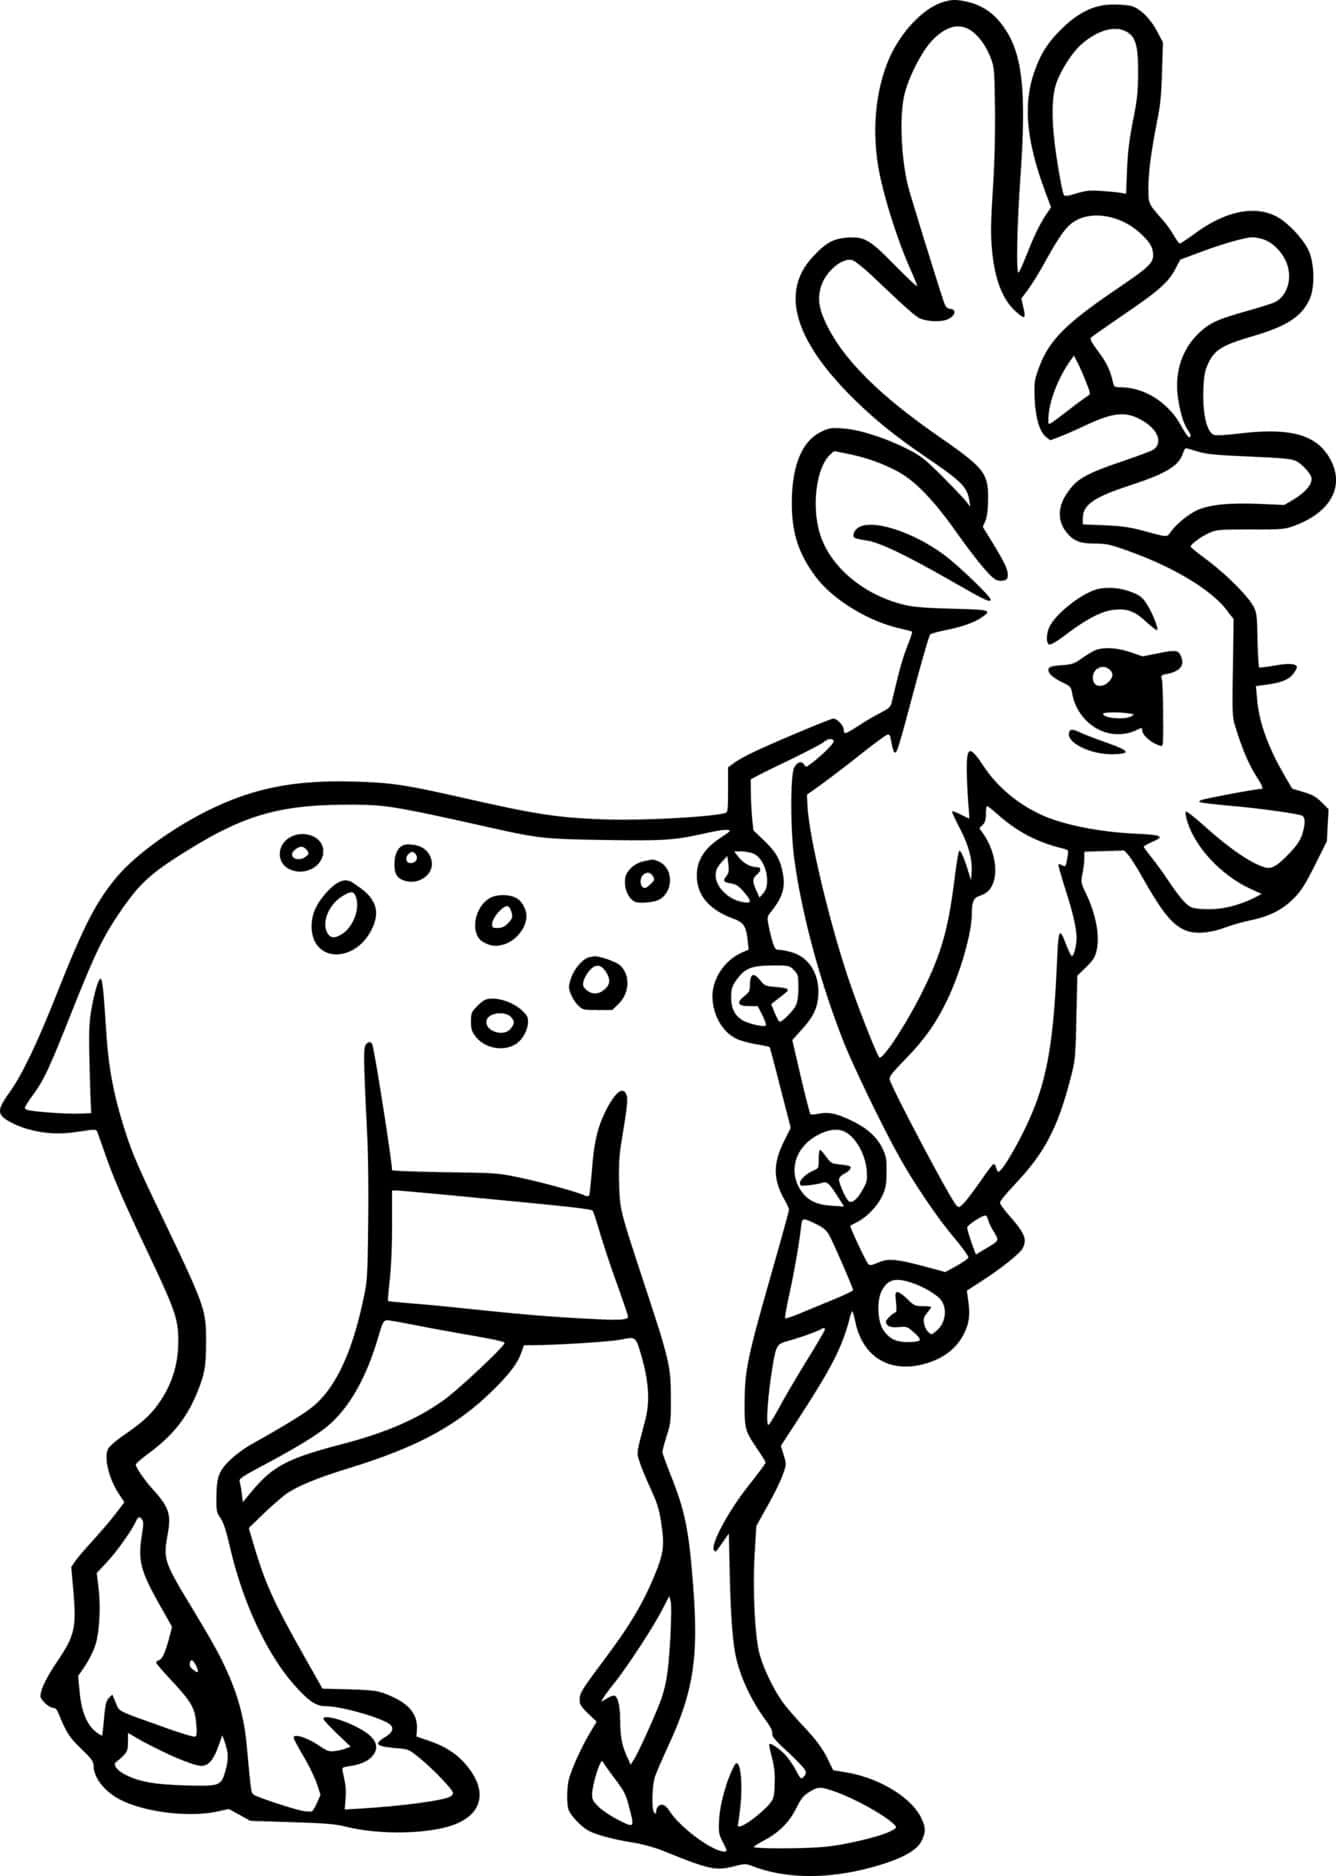 Cartoon Deer With Bells Coloring Page